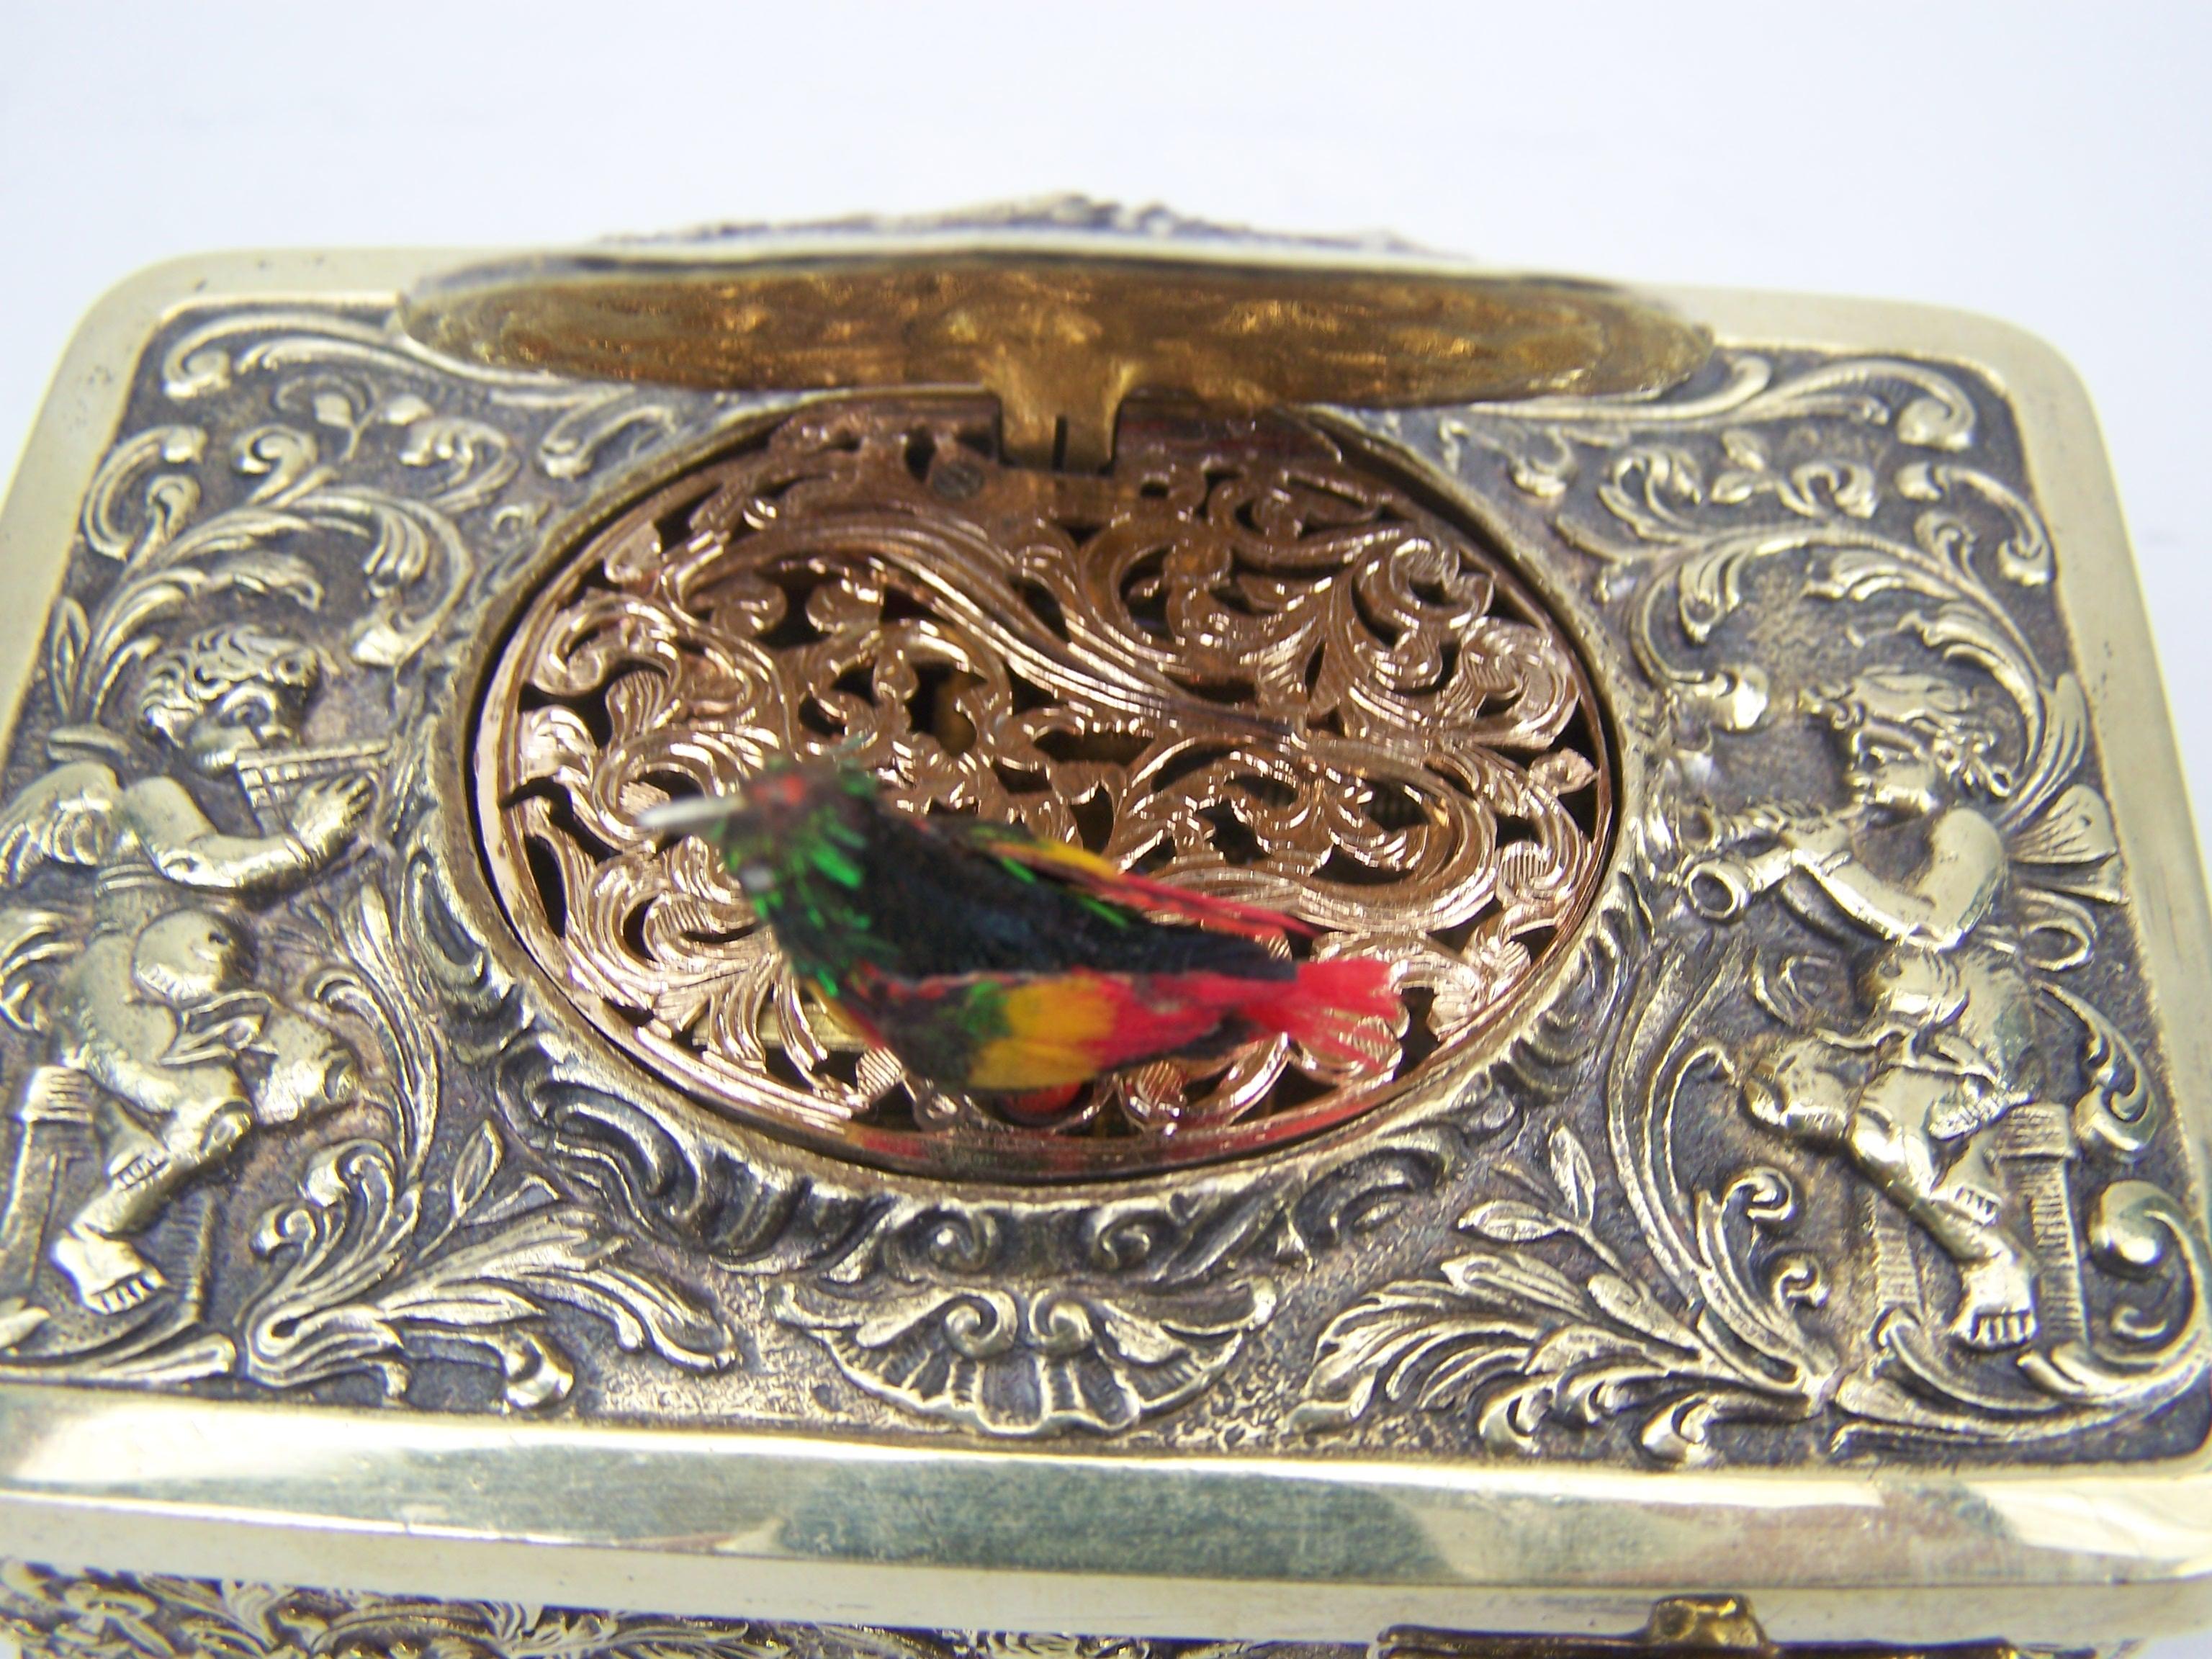 Singing bird box by K Griesbaum in guilded case 8